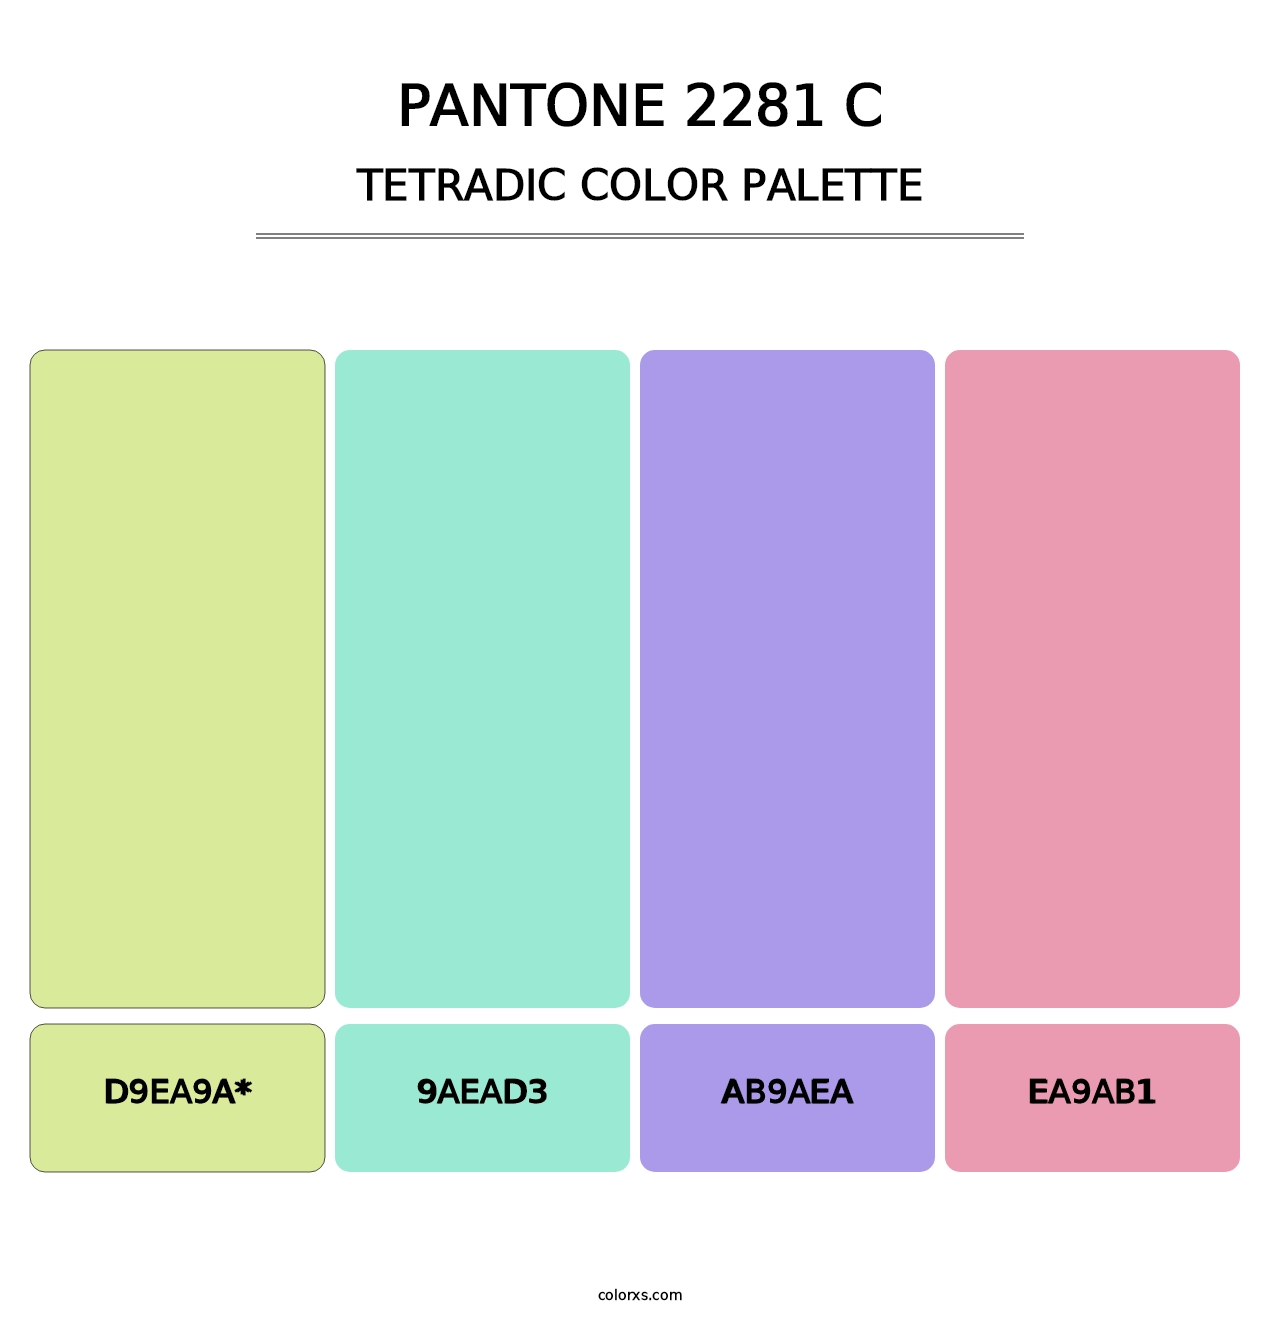 PANTONE 2281 C - Tetradic Color Palette